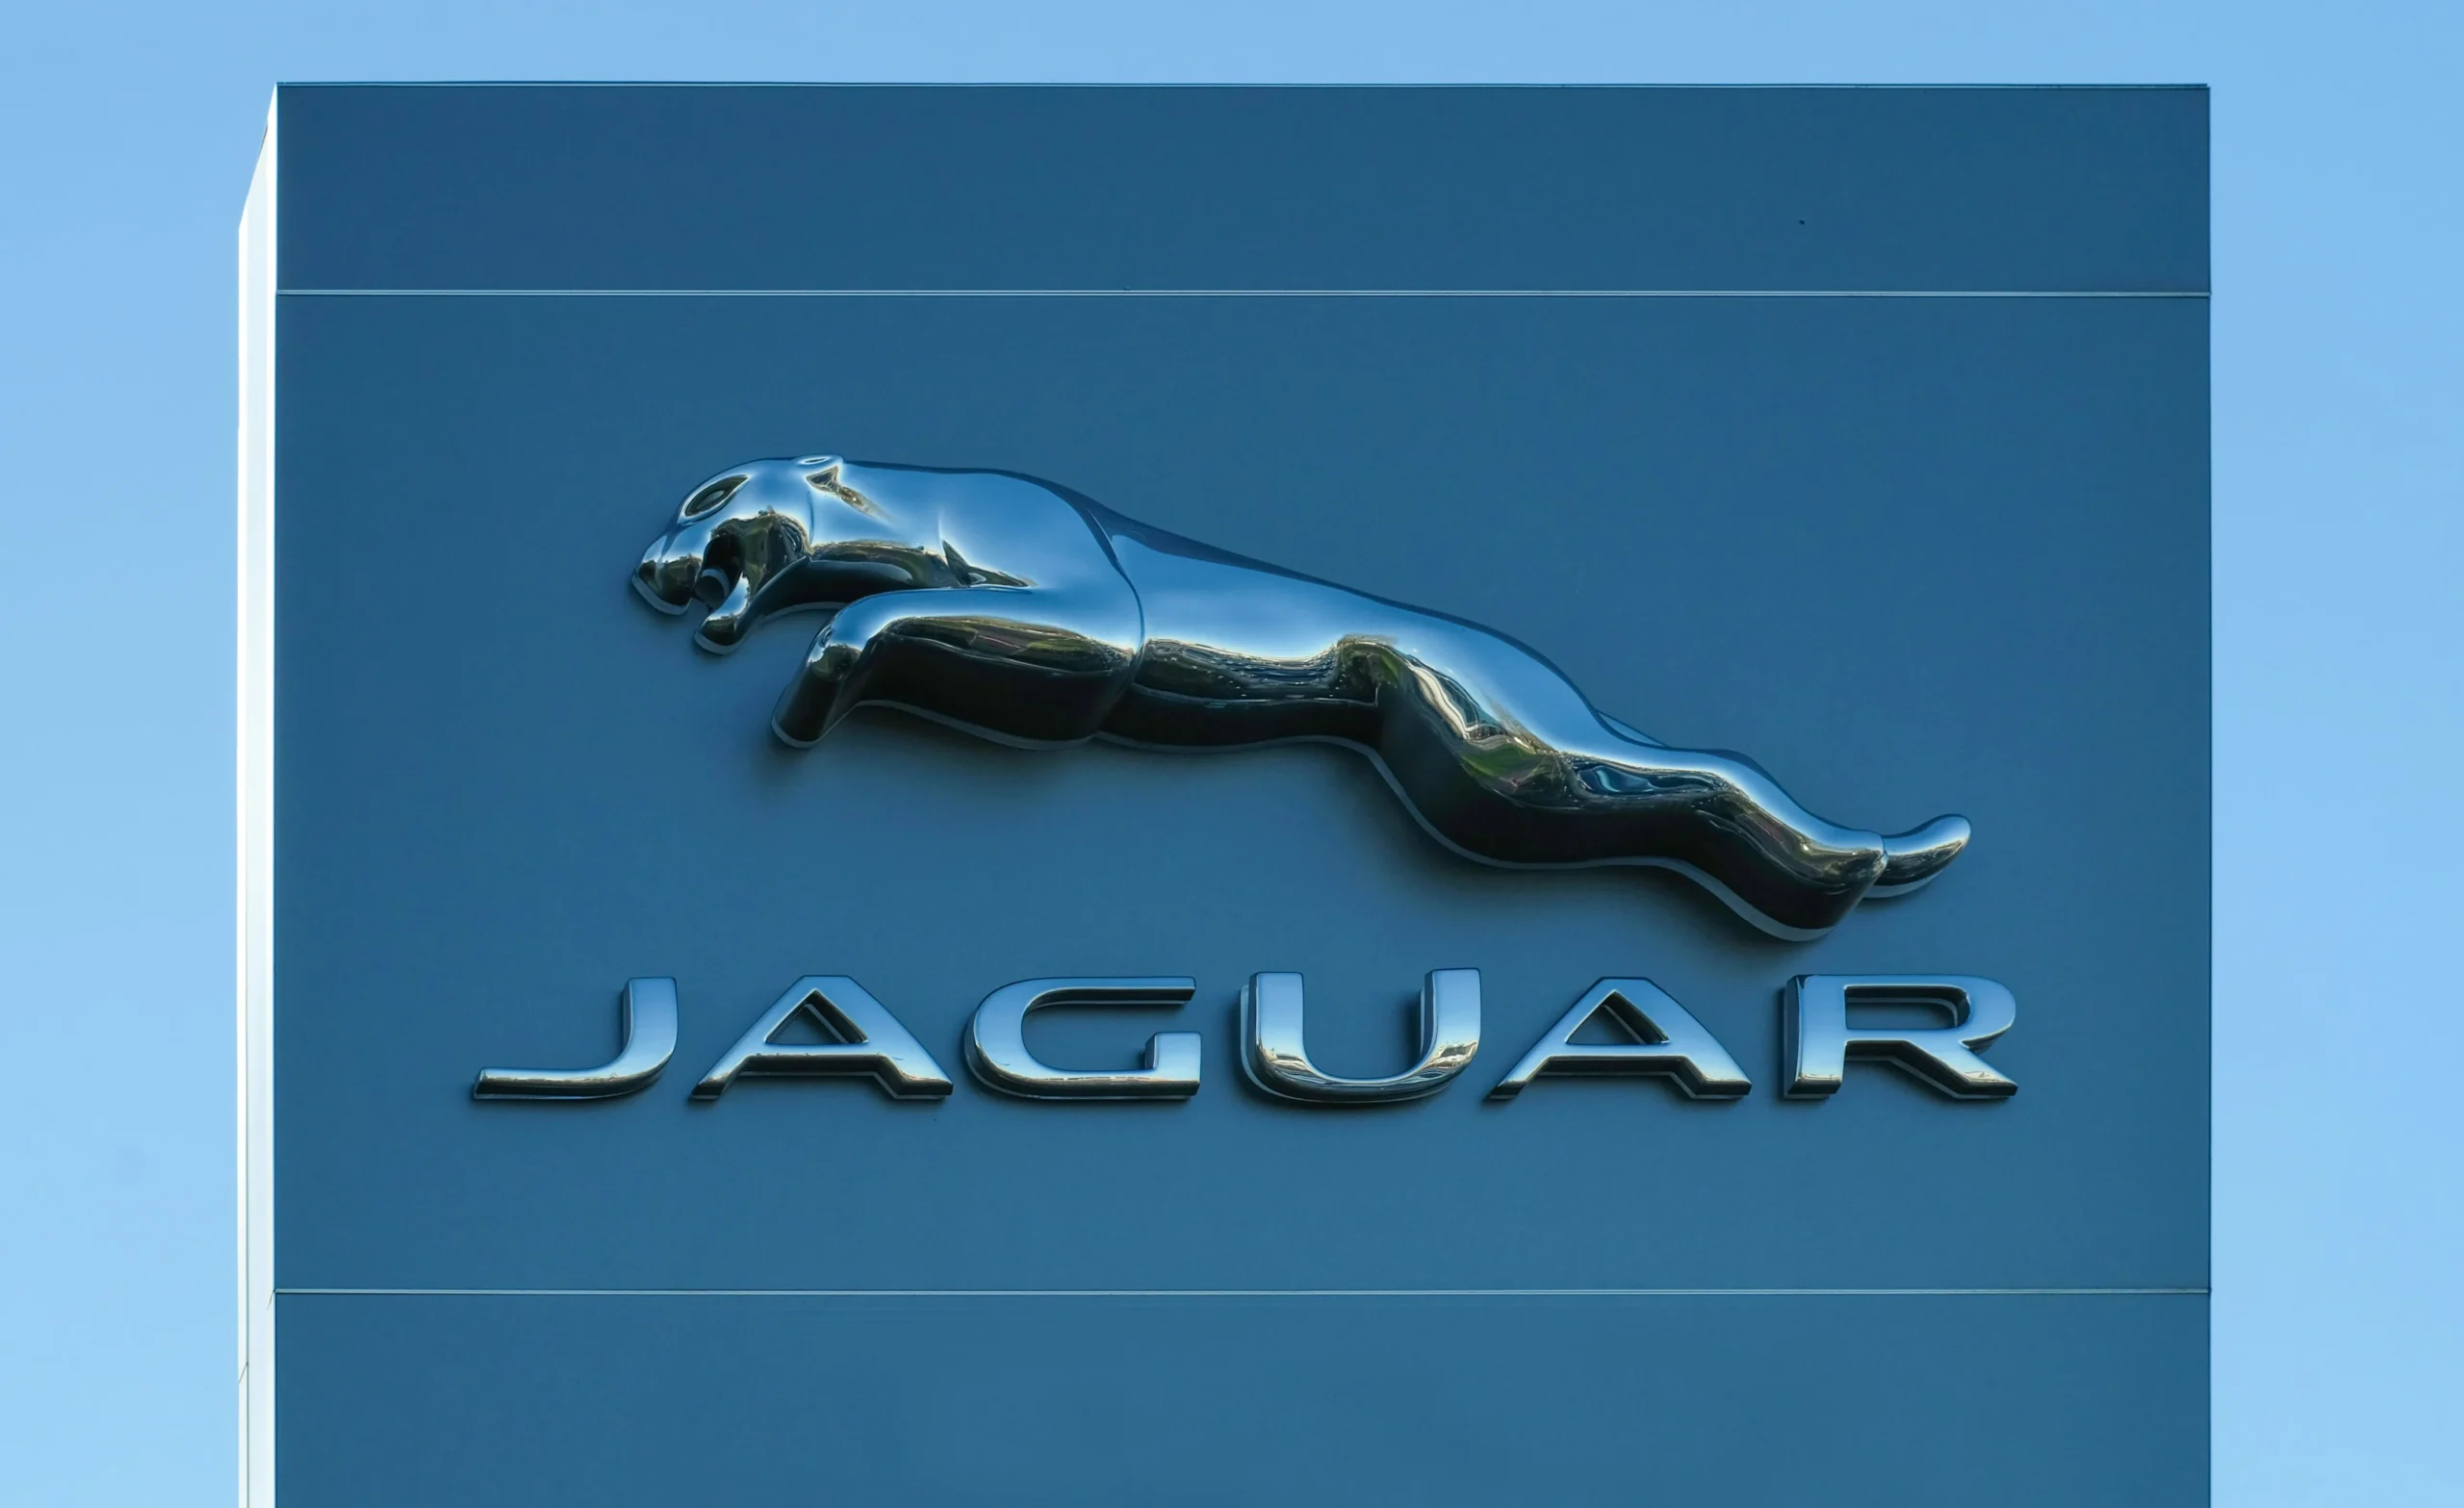 The Jaguar logo on a billboard.